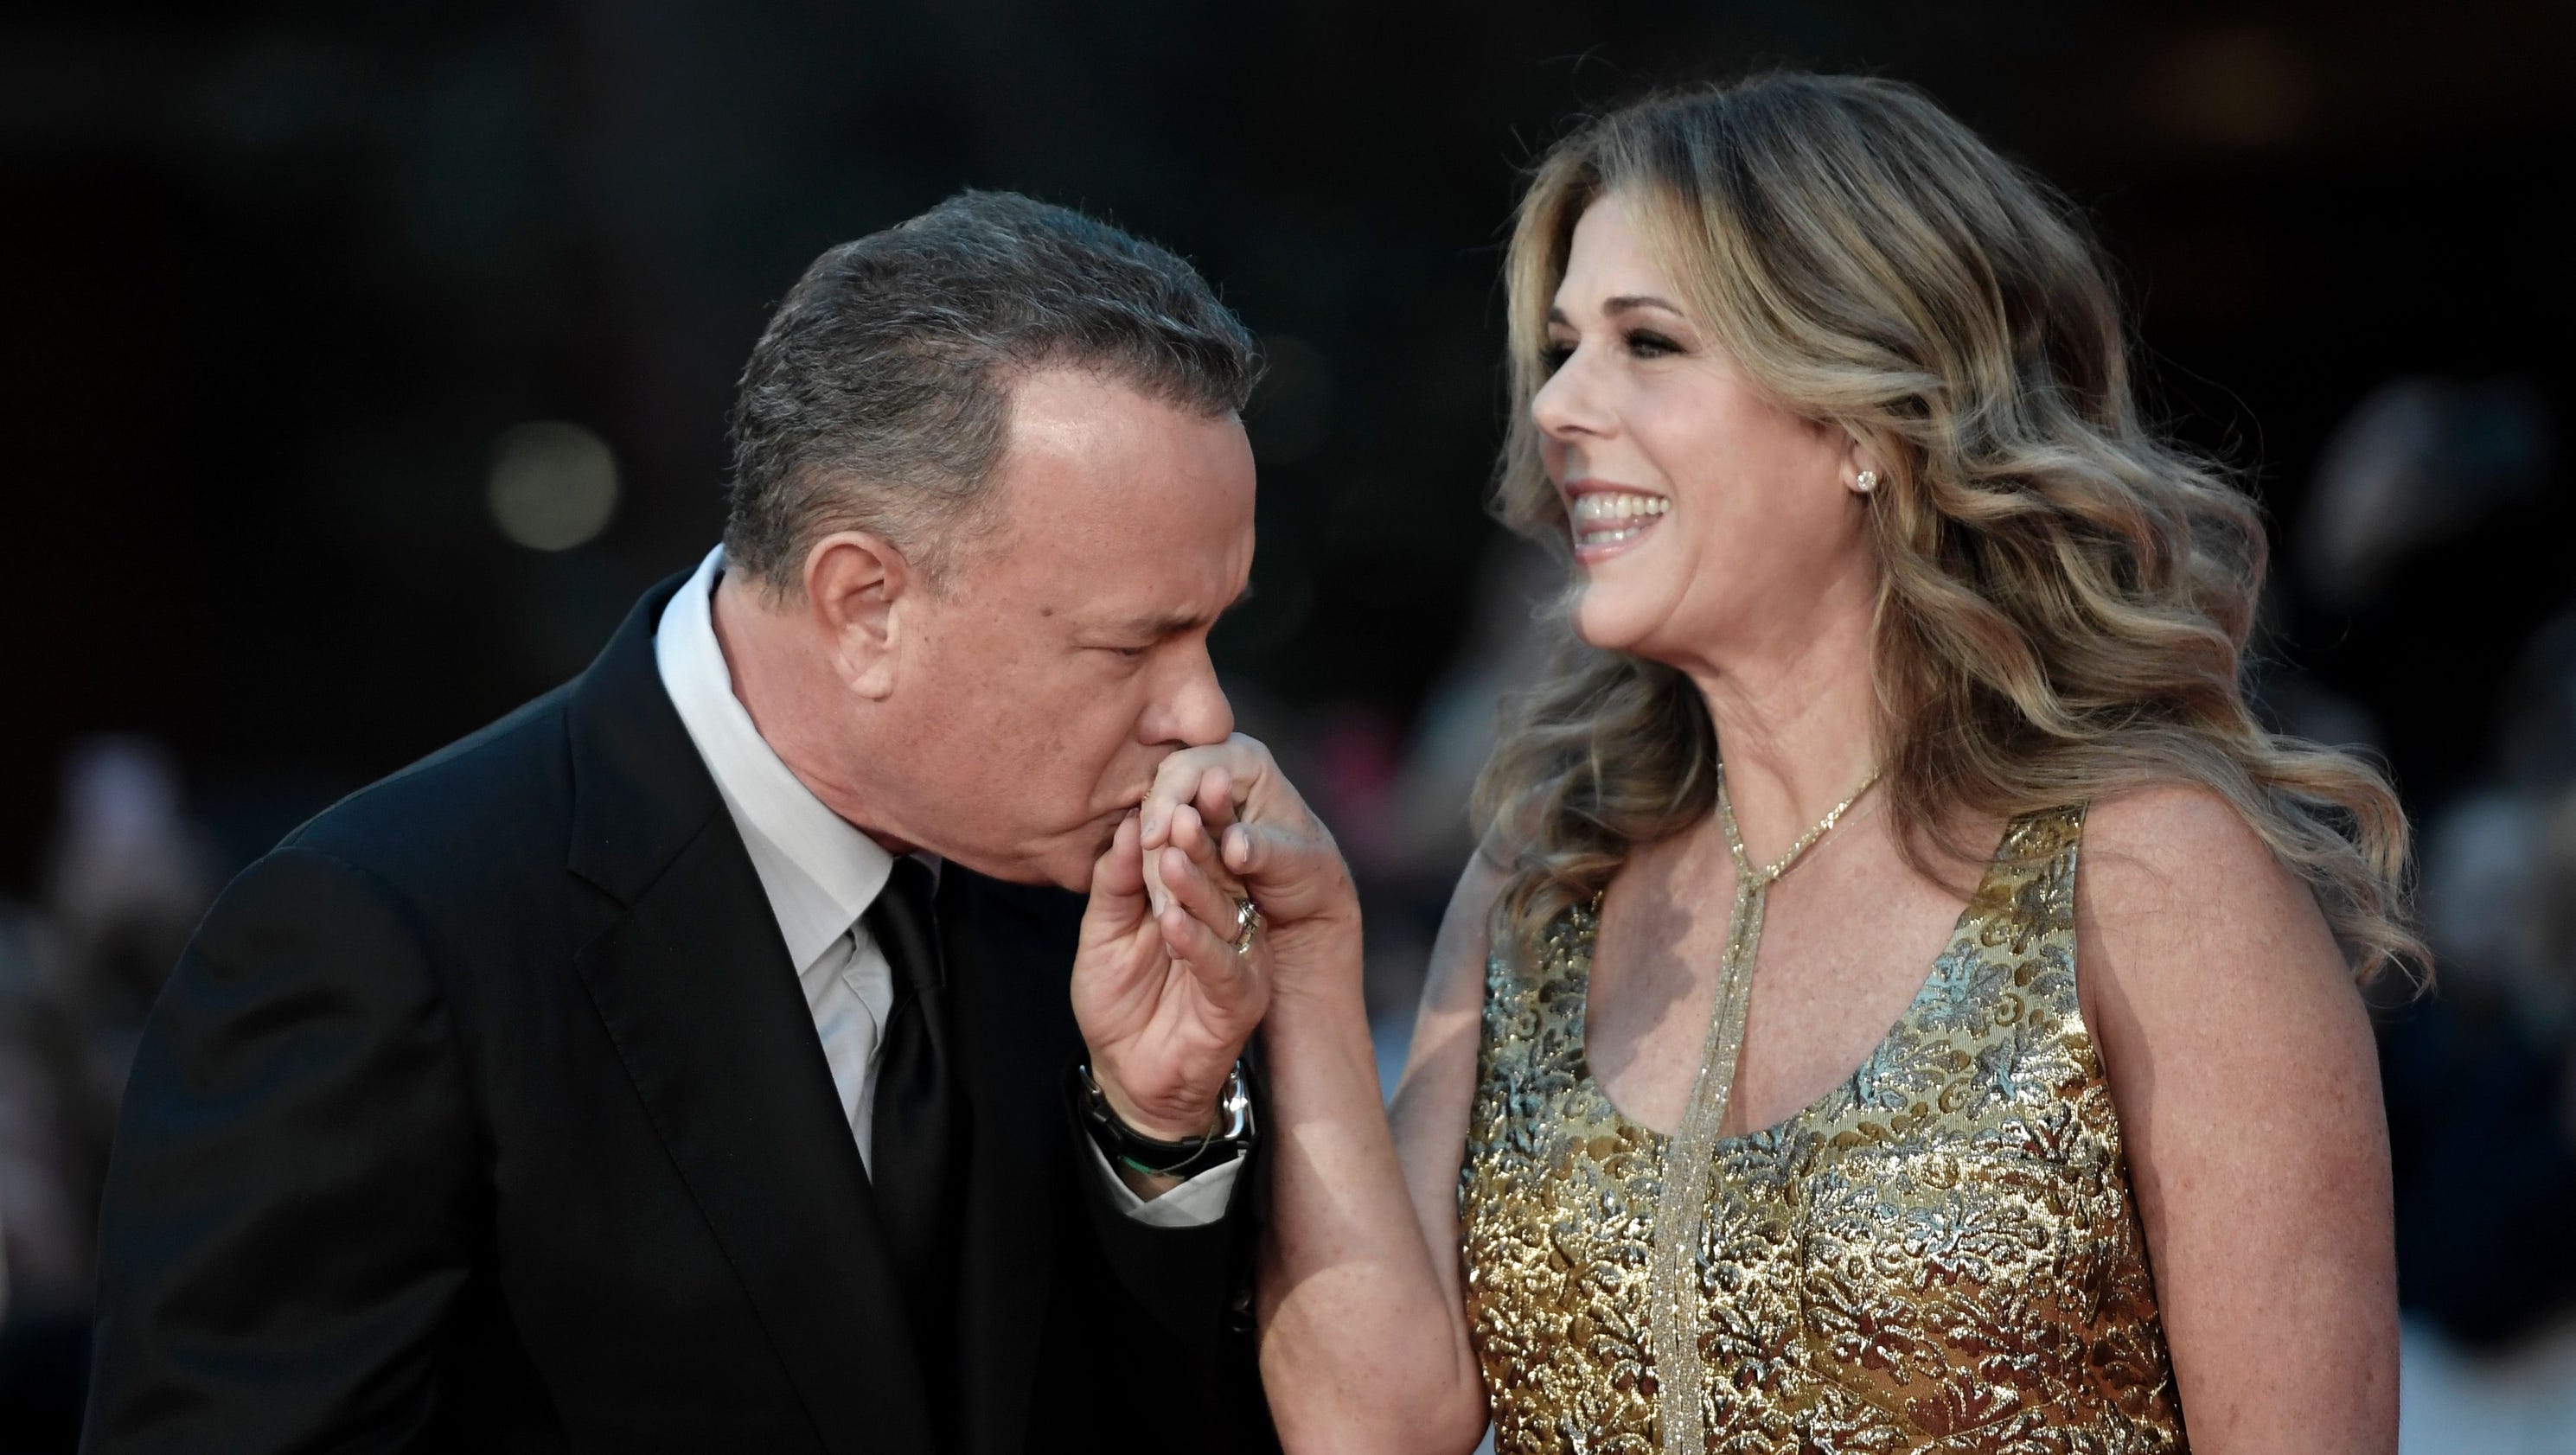 Tom Hanks talks about 'that fine Hanks' butt in wife's favorite movie scene